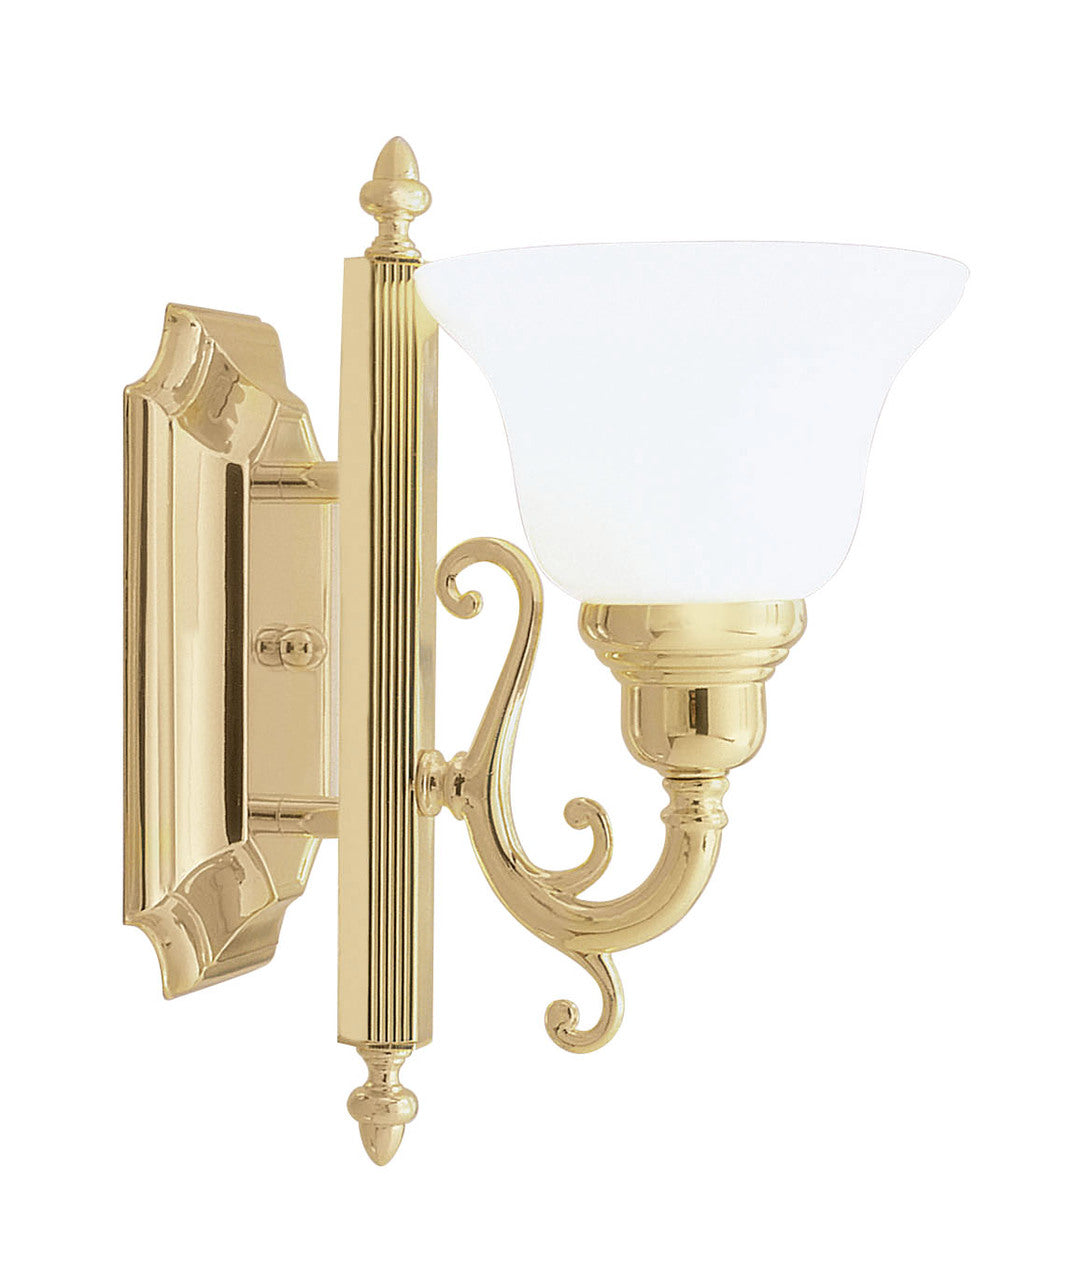 LIVEX Lighting 1281-02 French Regency Bath Light in Polished Brass (1 Light)